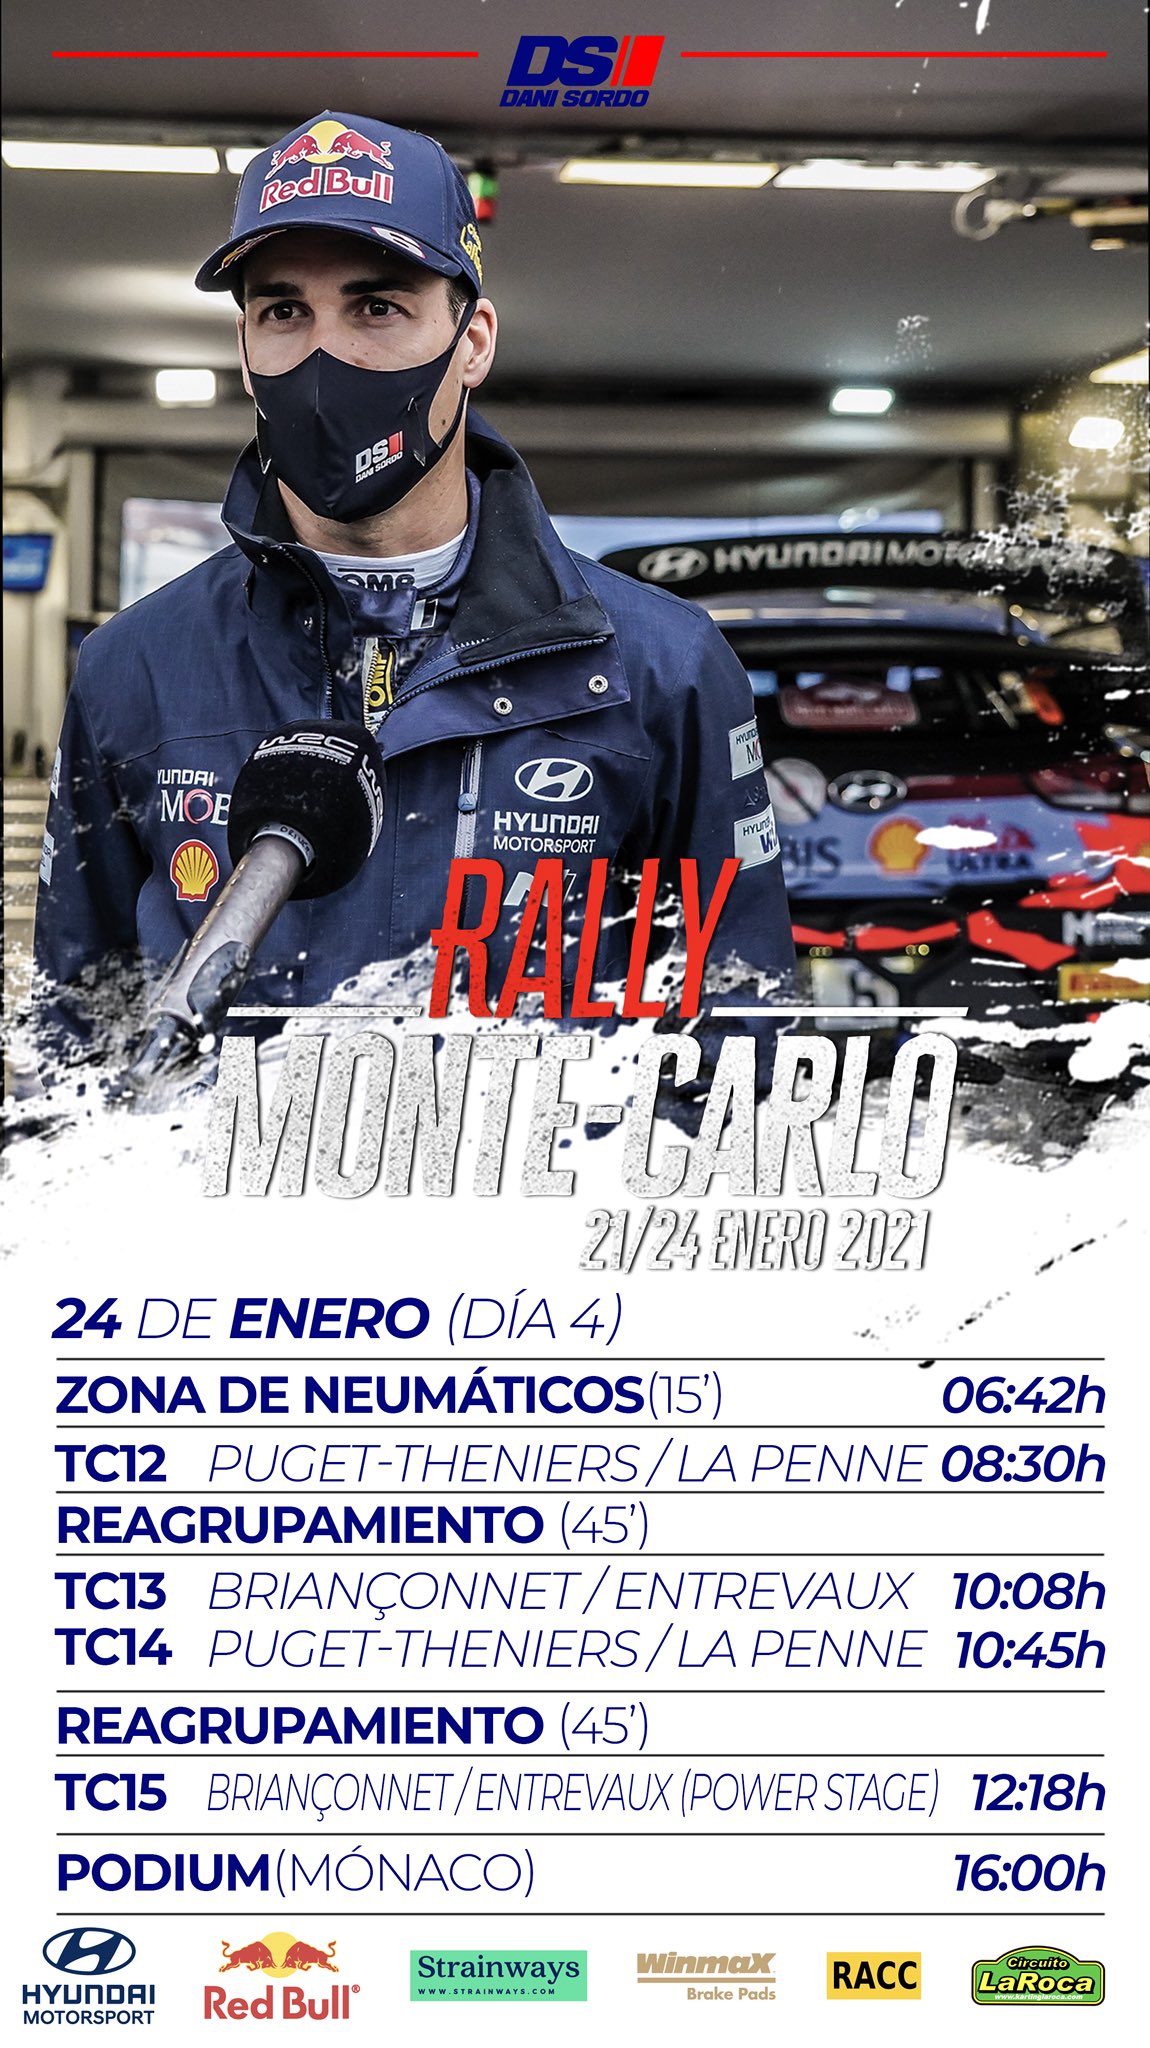 SkodaFabiaRally2Evo - WRC: 89º Rallye Automobile de Monte-Carlo [18-24 Enero] - Página 13 Esea2fOXYAURuXC?format=jpg&name=large